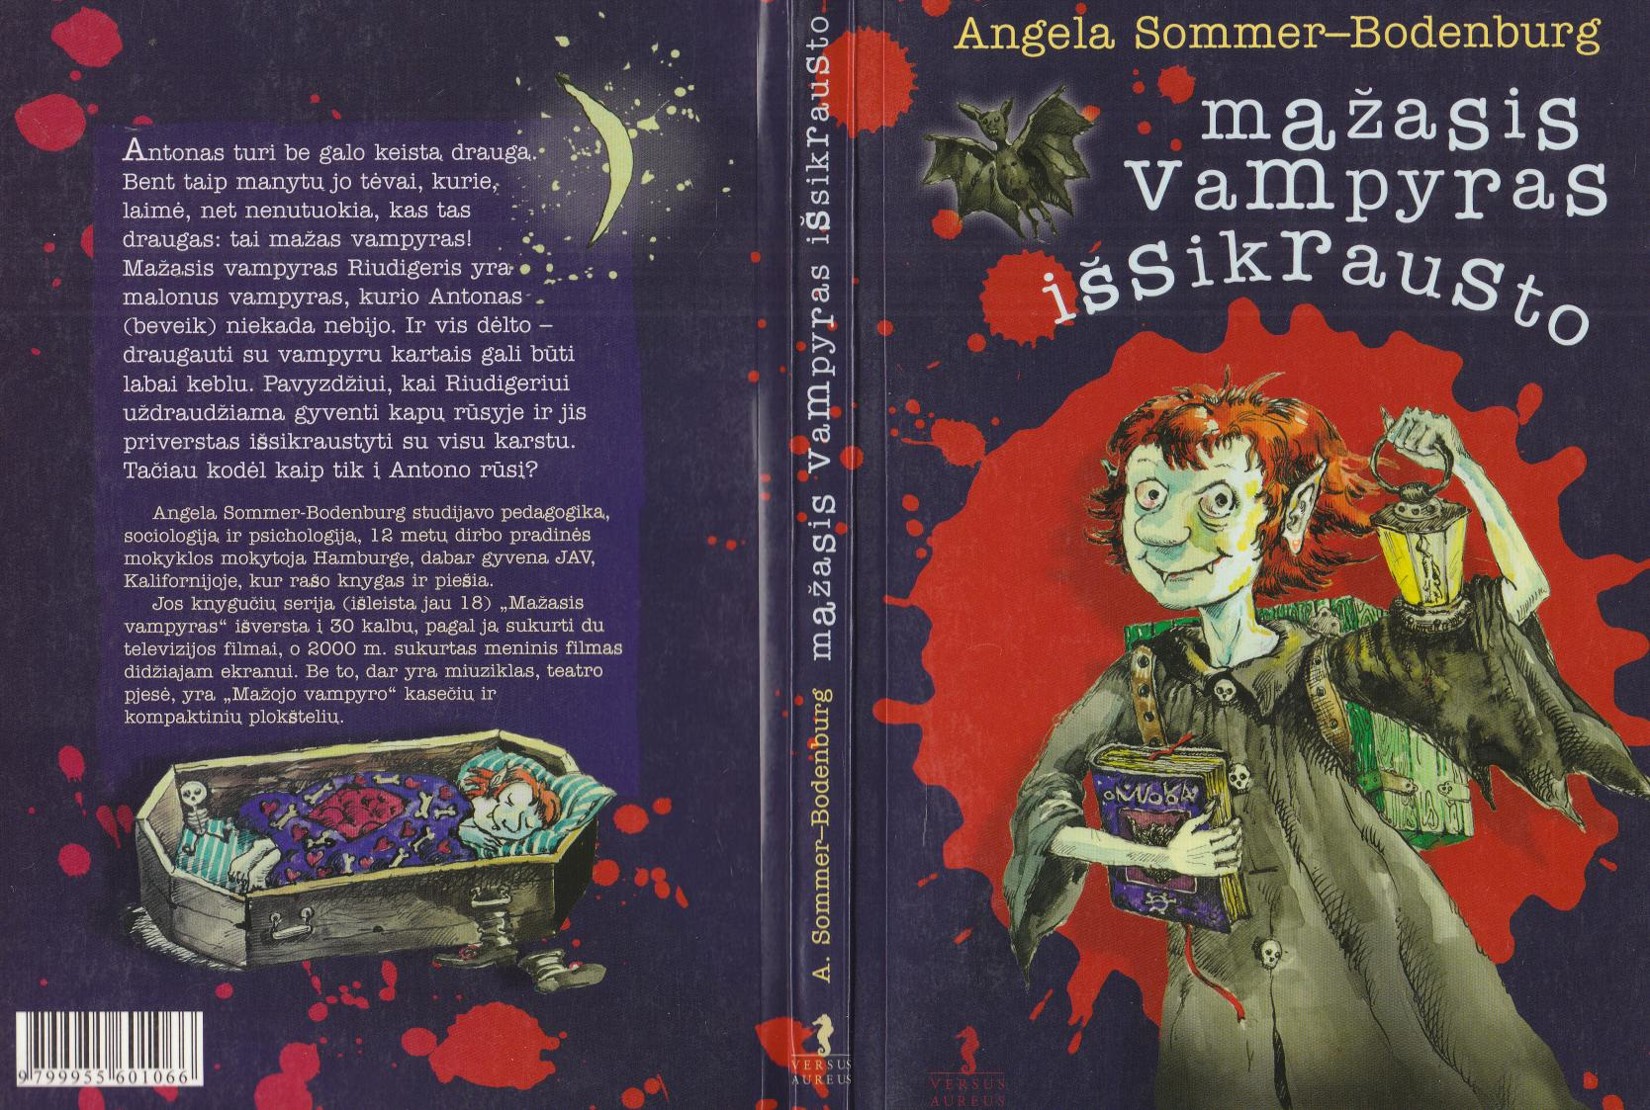 Angela Sommer-Bodenburg - Mažasis vampyras išsikrausto (2004 LT)